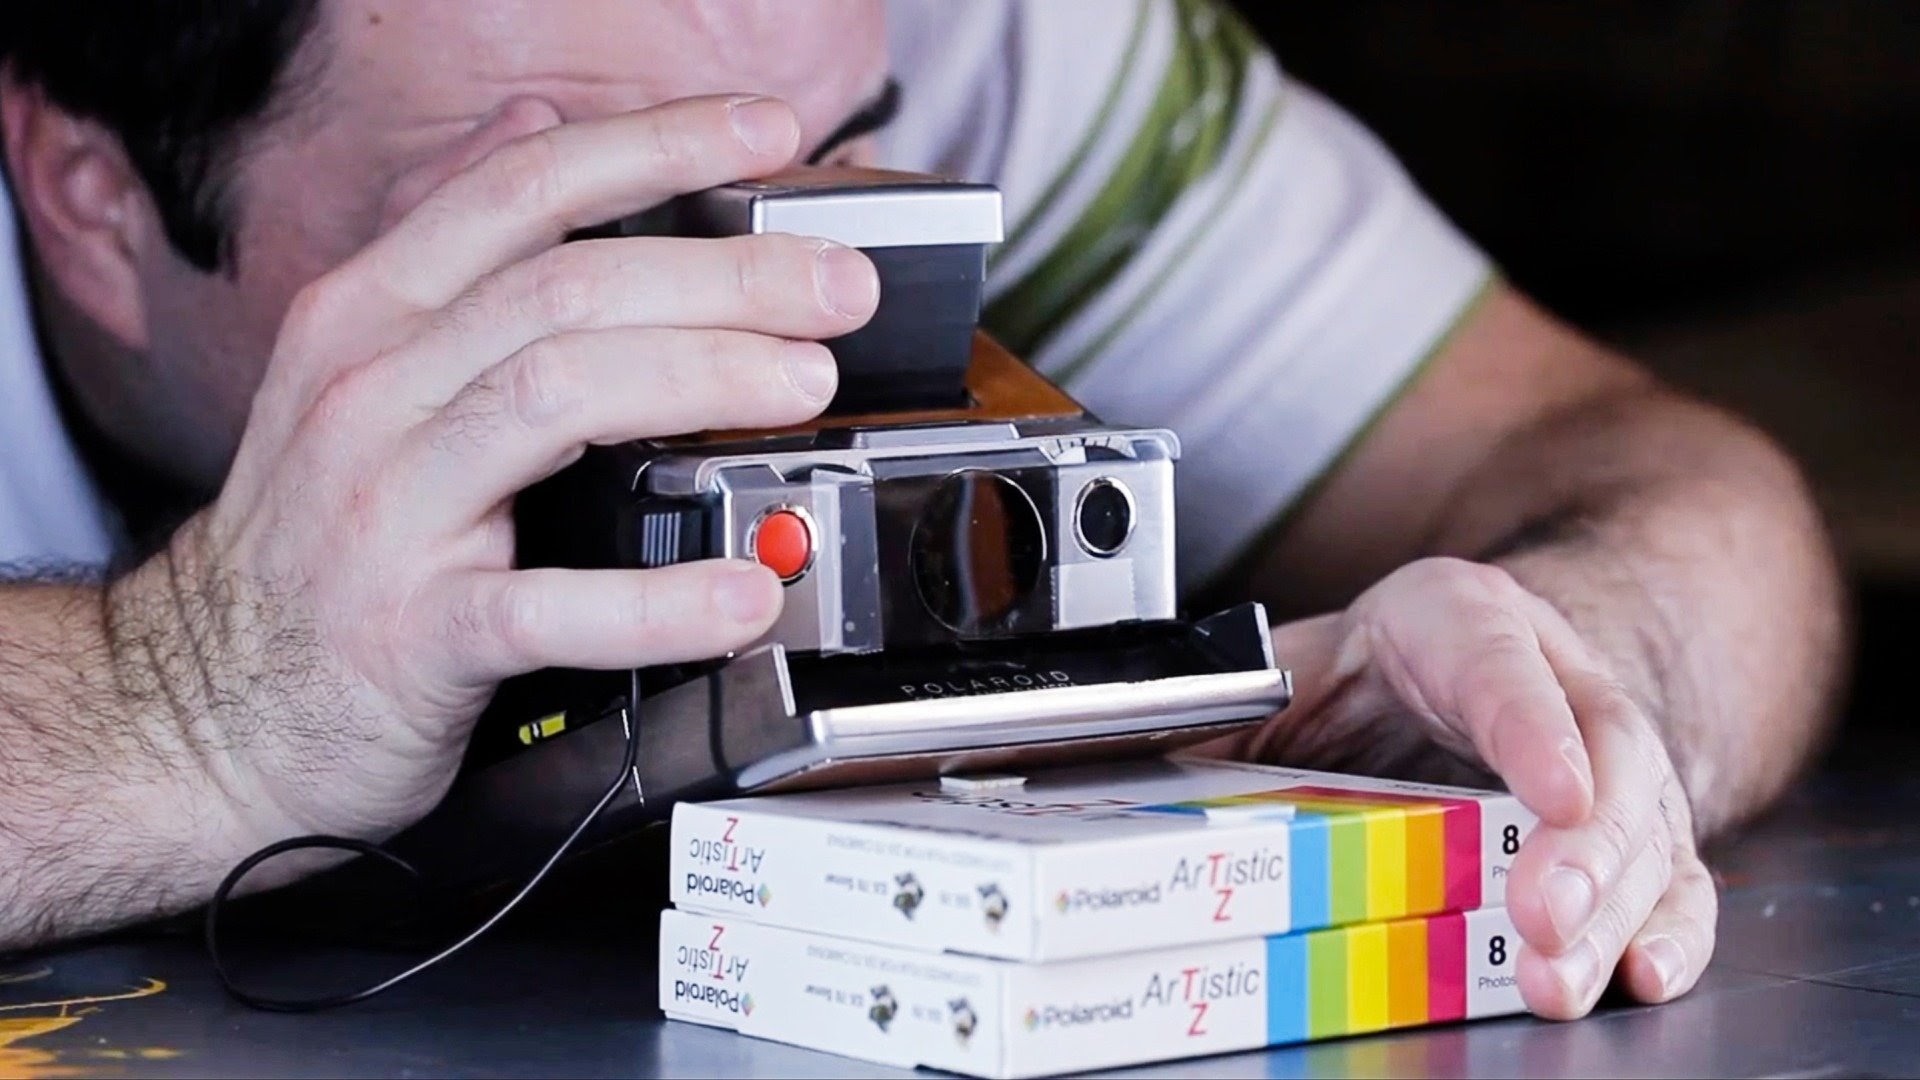 Time Zero: The Last Year of Polaroid Film - Movies on Google Play